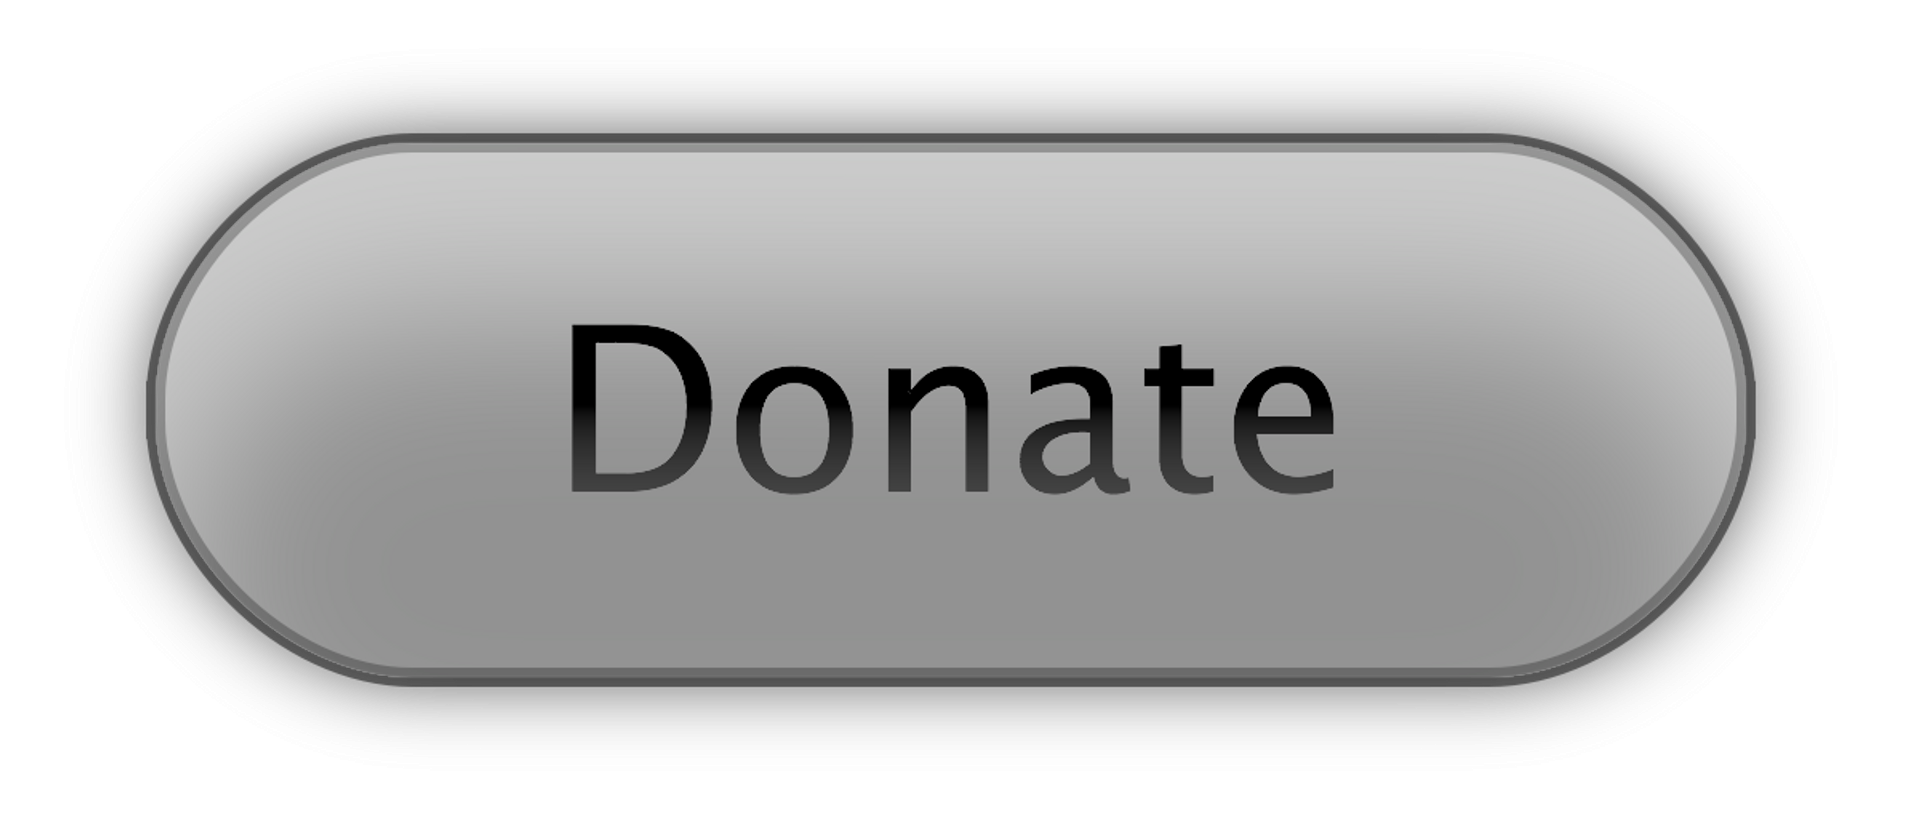 Что написать в донате. Кнопка донат. Изображение на кнопку доната. Кнопка донат для Твича. Изображения для доната на твиче.